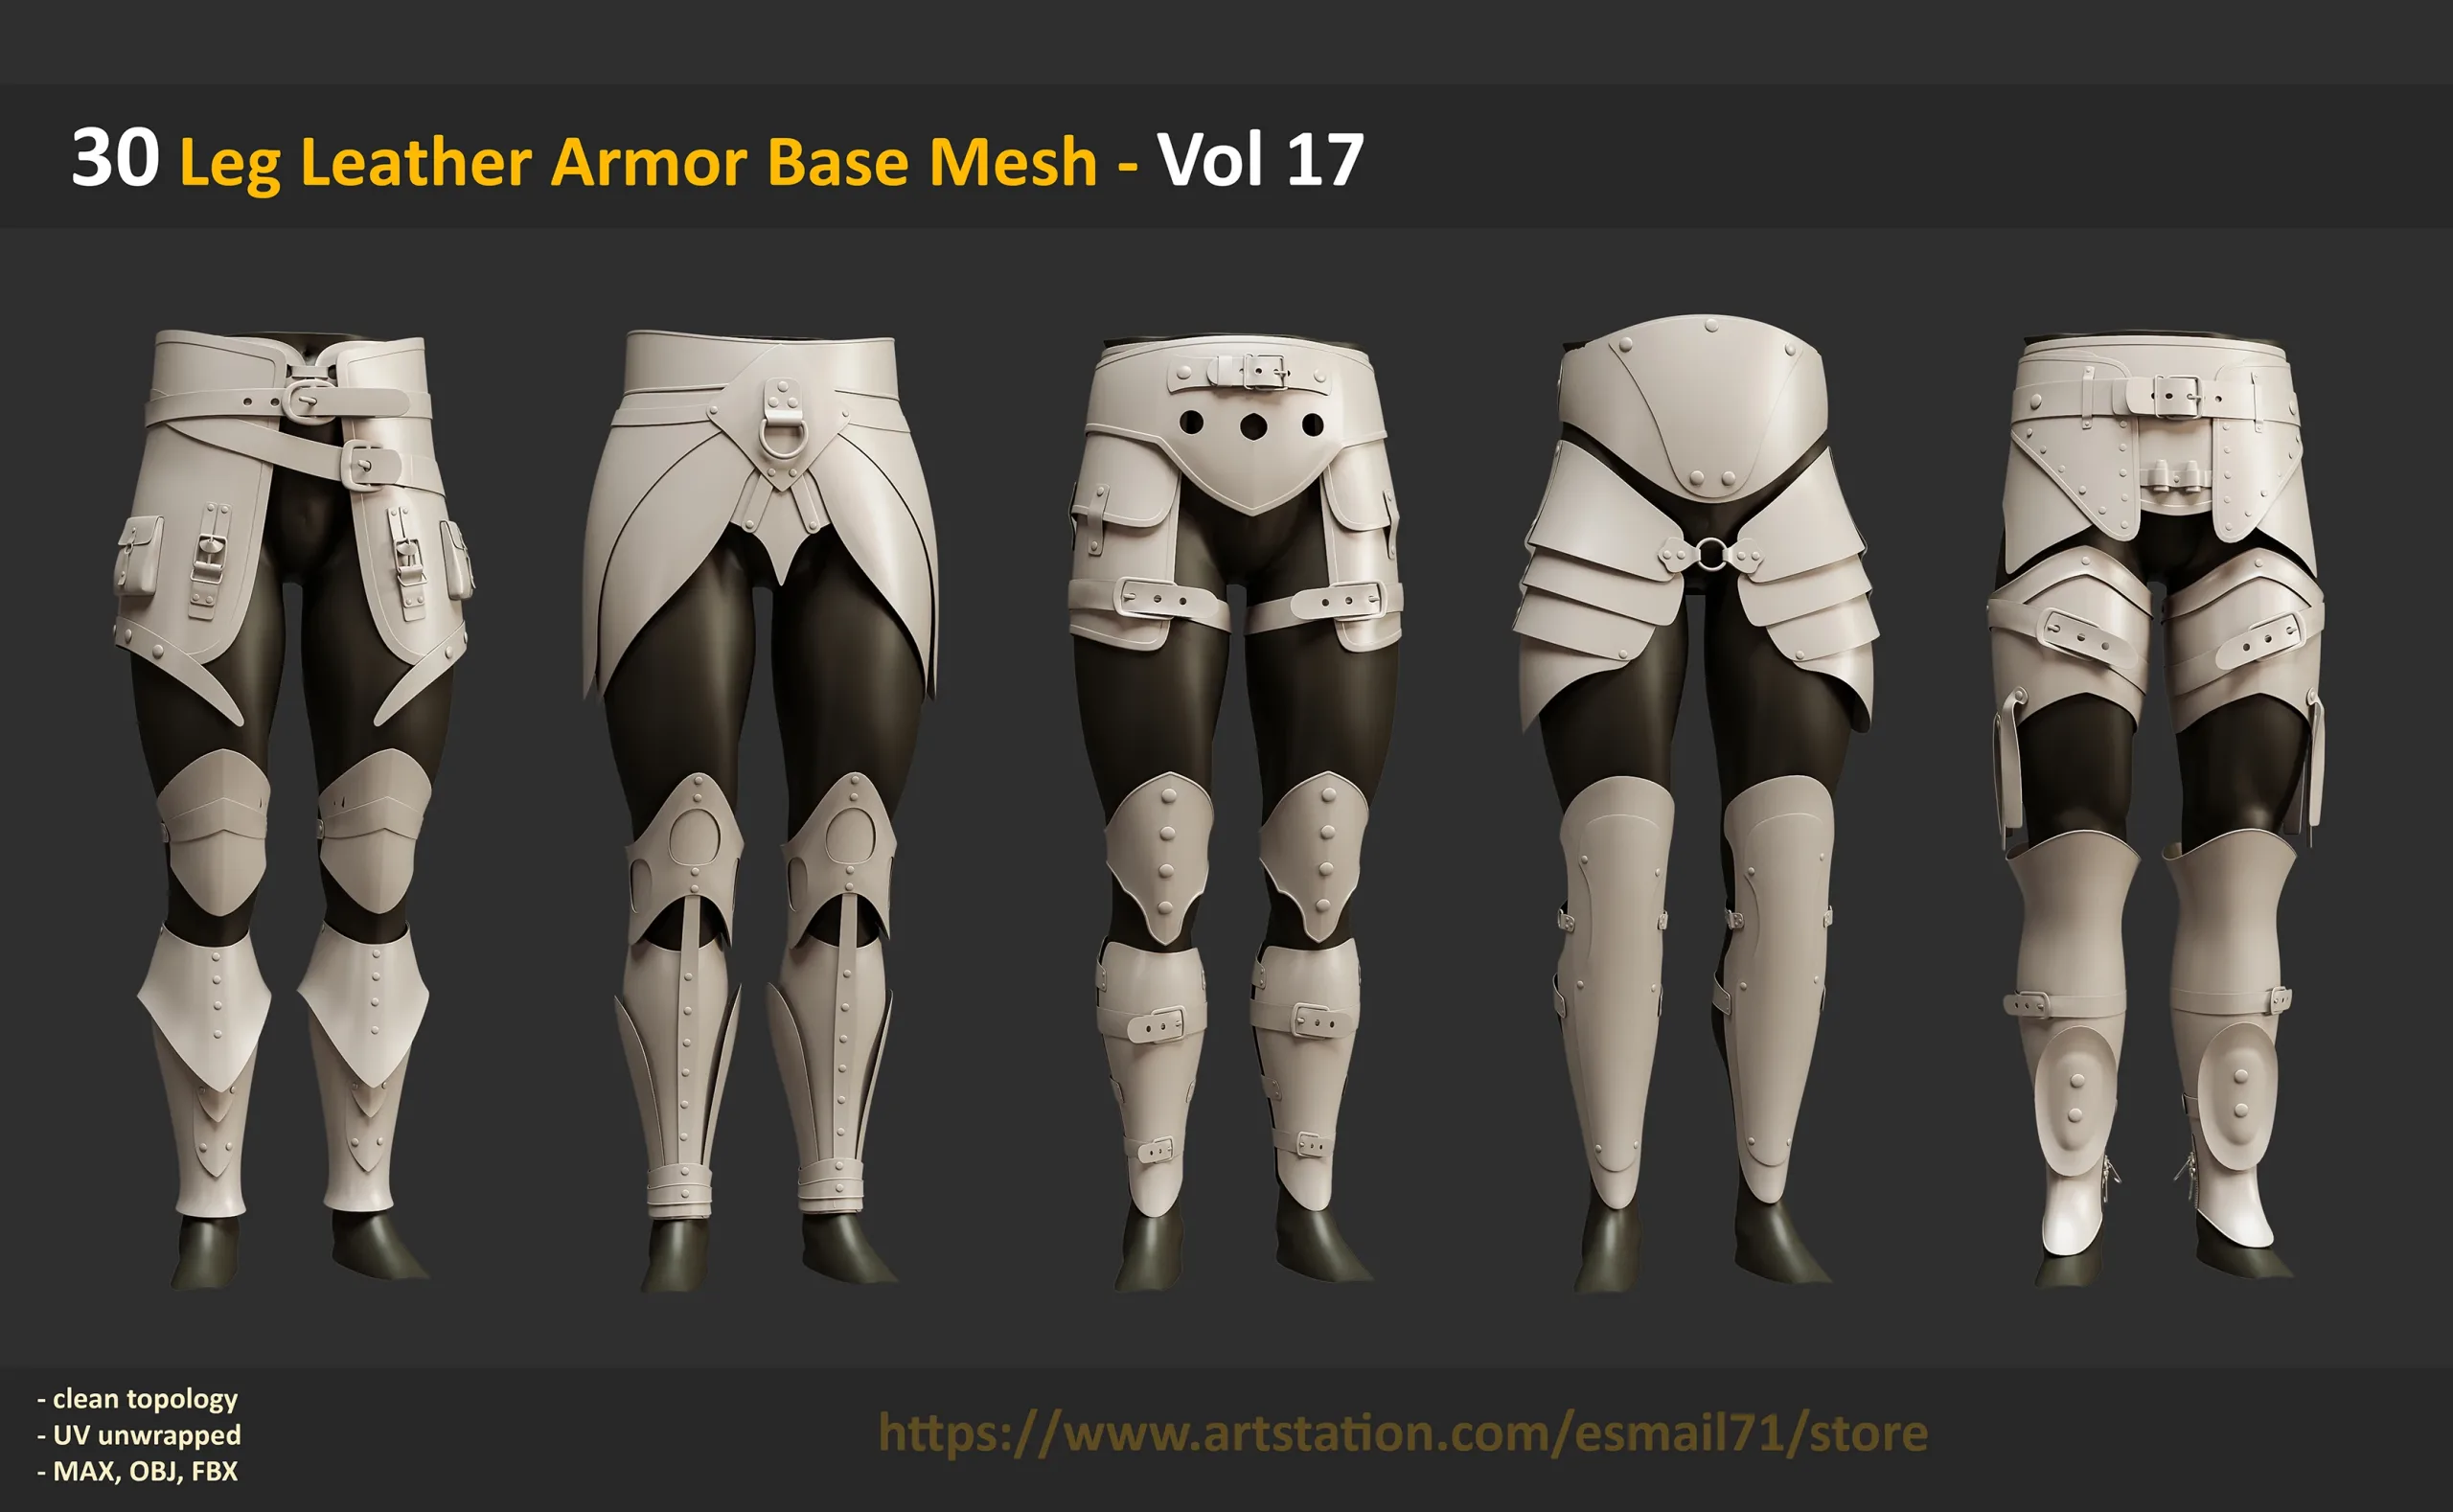 30 Leg Leather Armor Base Mesh - Vol 17